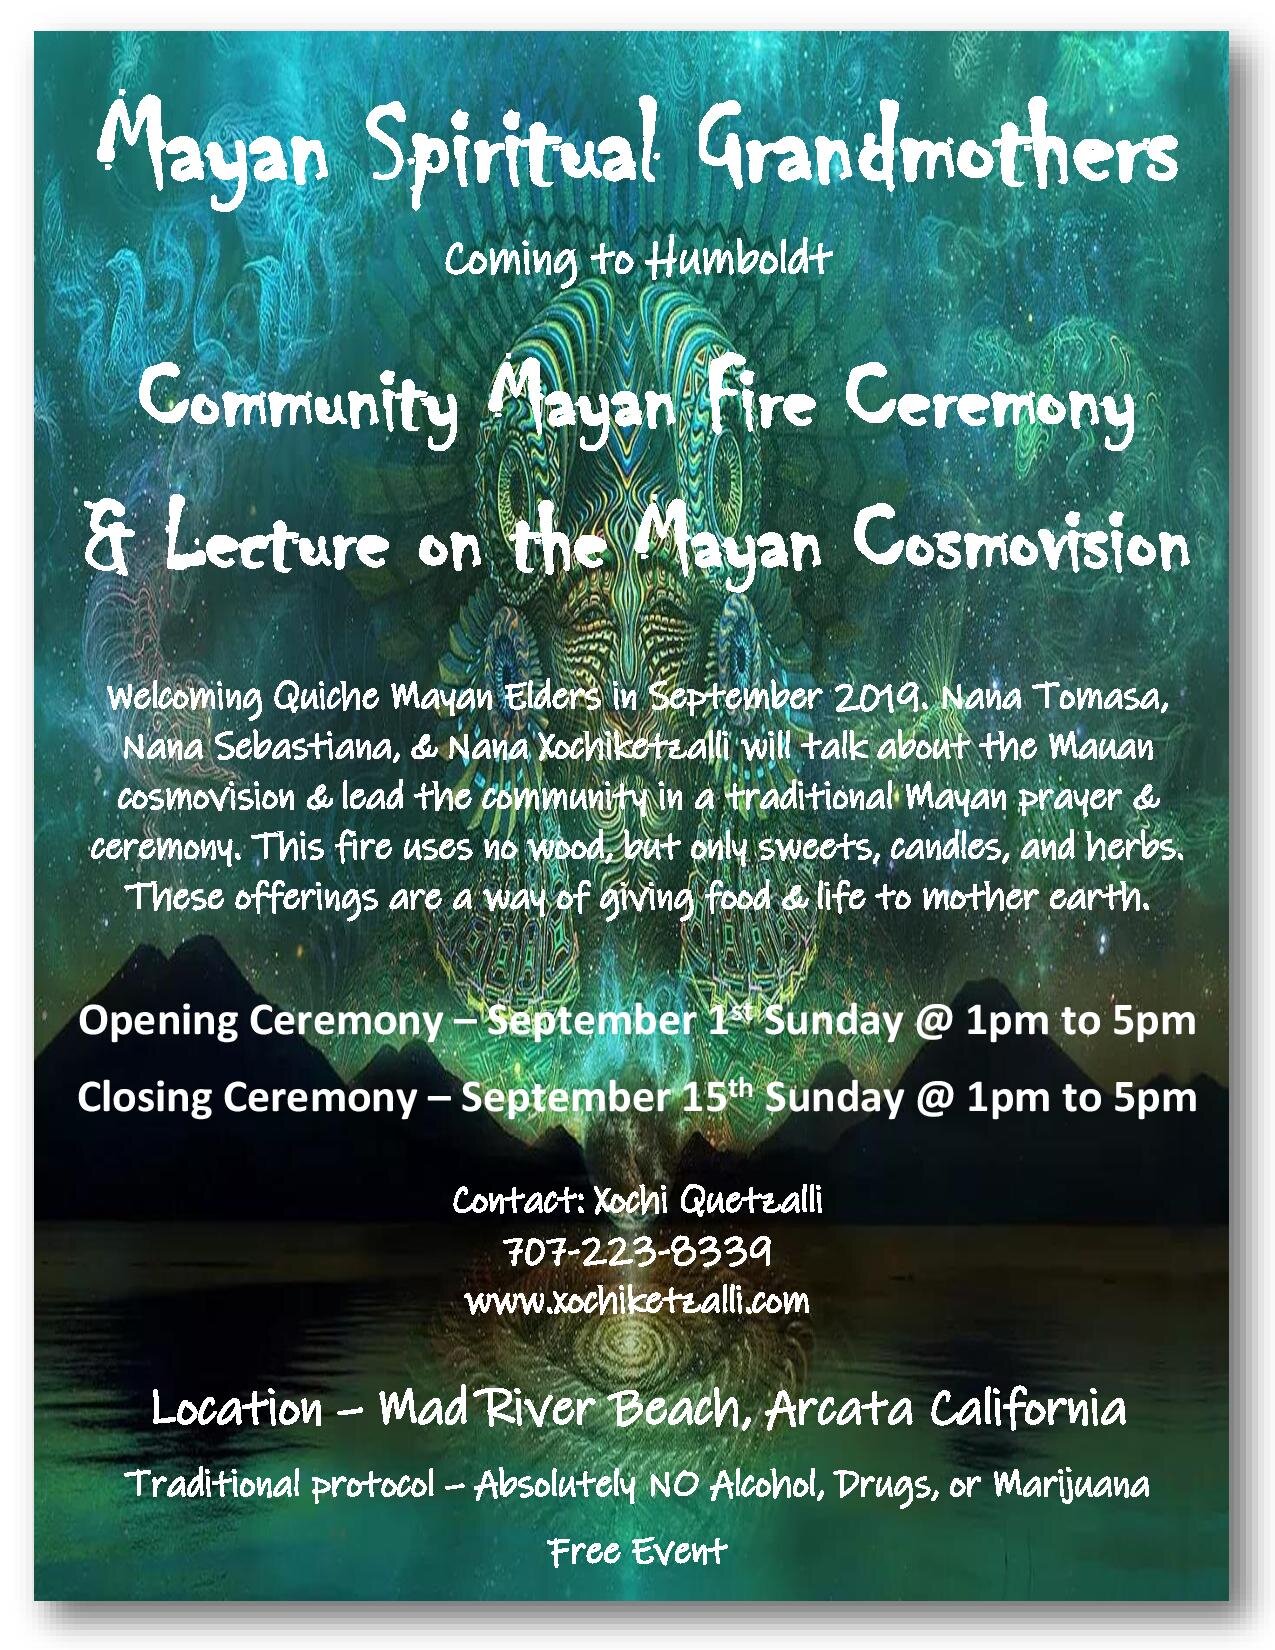 nanas community fire ceremony flyer-page-001.jpg